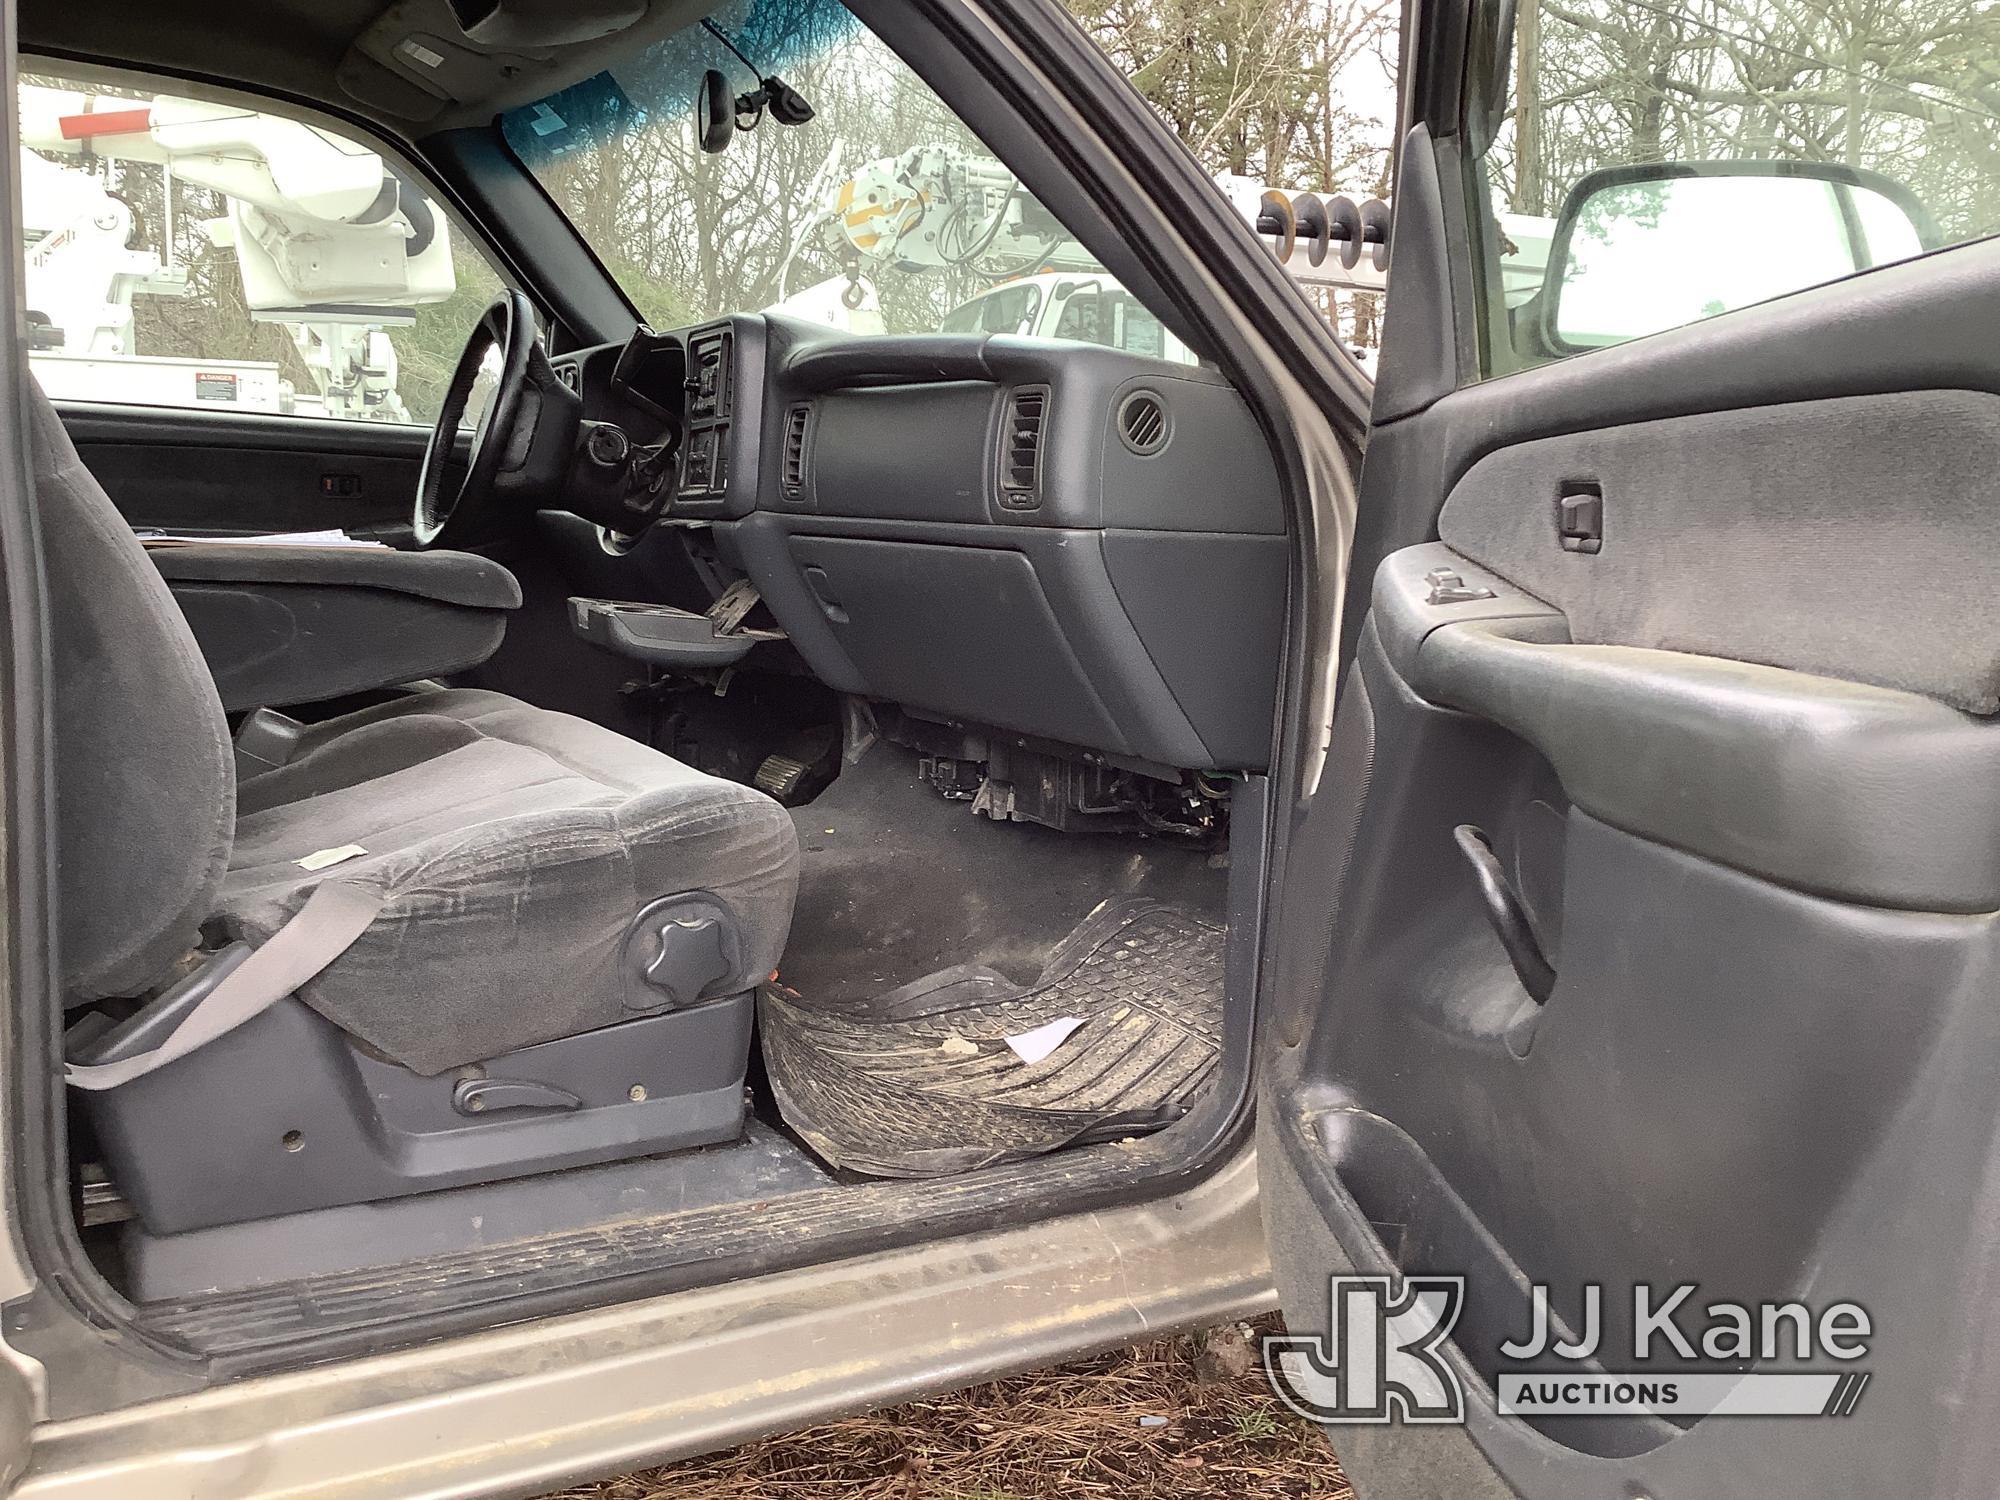 (Graysville, AL) 2000 Chevrolet Silverado 2500 4x4 Extended-Cab Pickup Truck Not Running, Condition